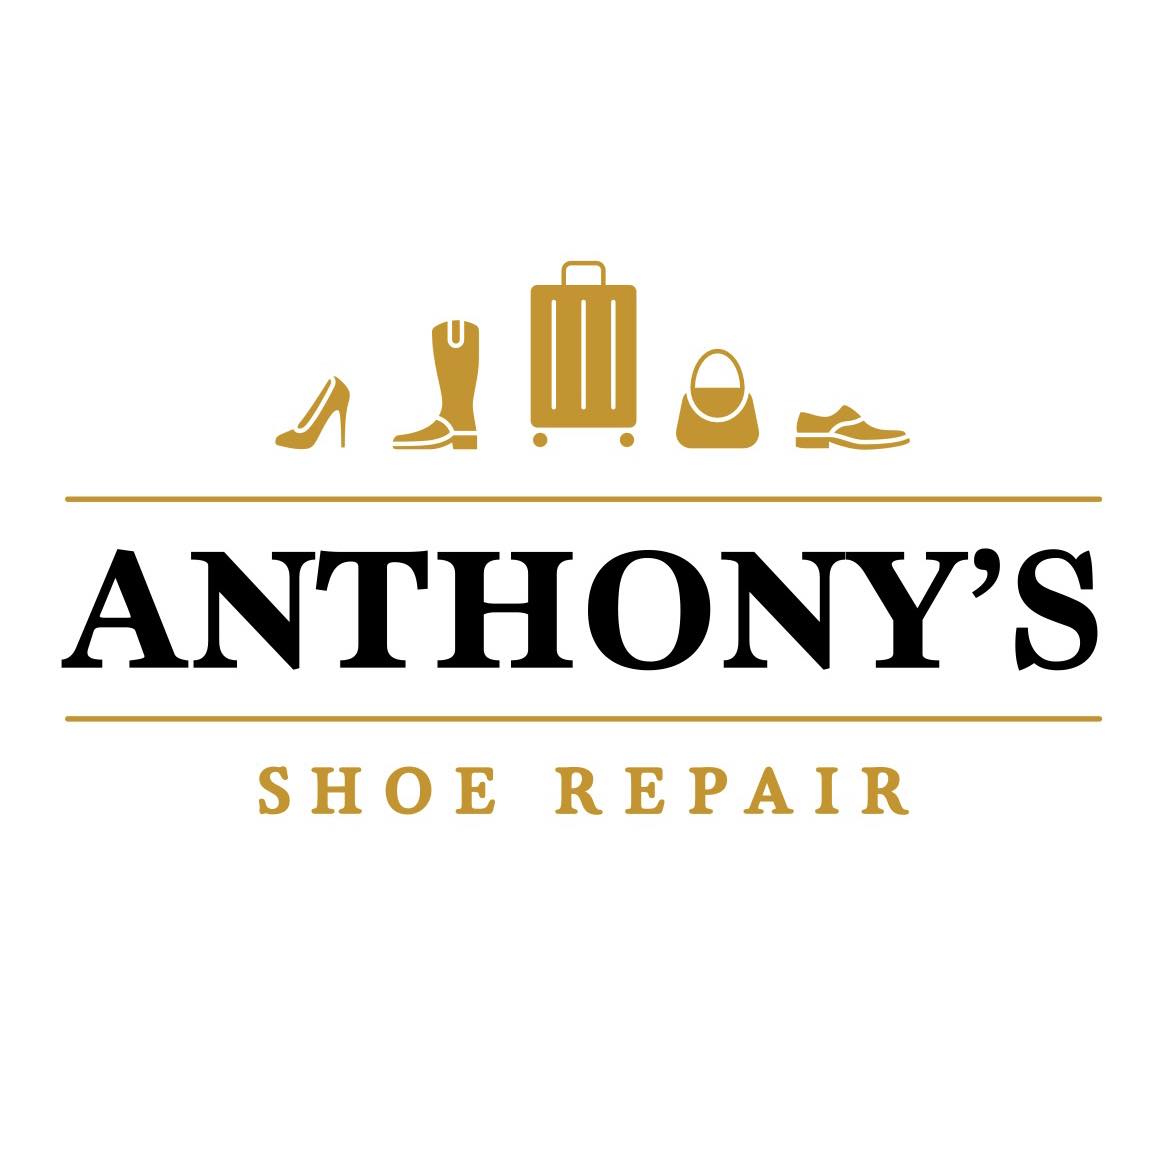 Anthony's Shoe Repair